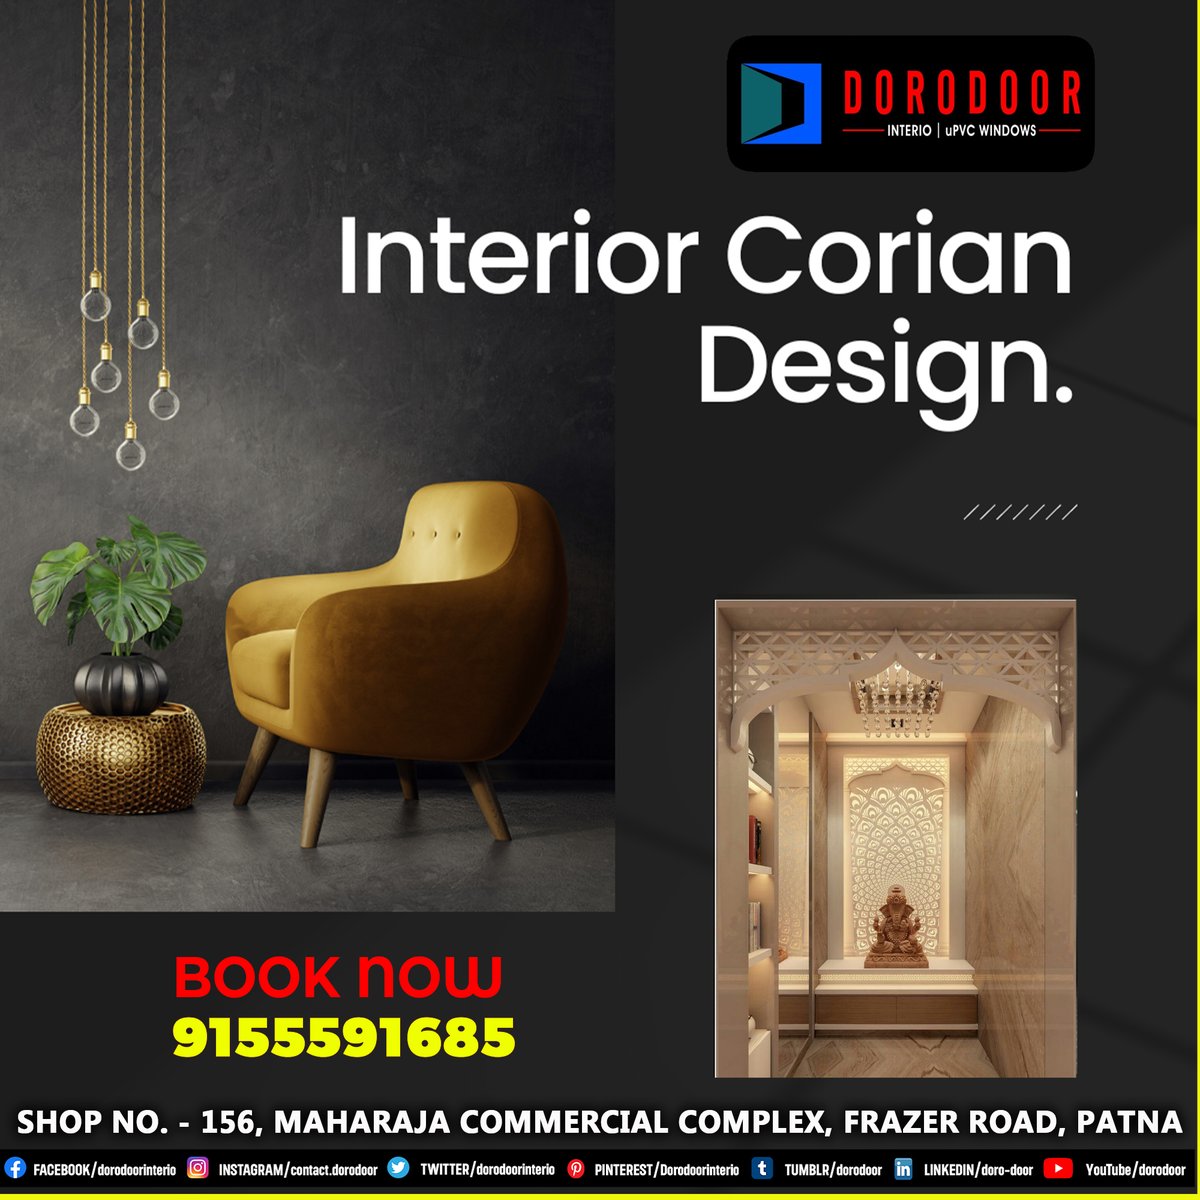 Discover the art of interior Corian design with DORODOOR today! 📷📷

#CorianDesign #InteriorInspiration #HomeDecor #ModernLiving #InnovativeDesign #ElegantSpaces #FunctionalDesign #DORODOORCreations #InteriorGoals #ArtistryInDesign #DesignExcellence